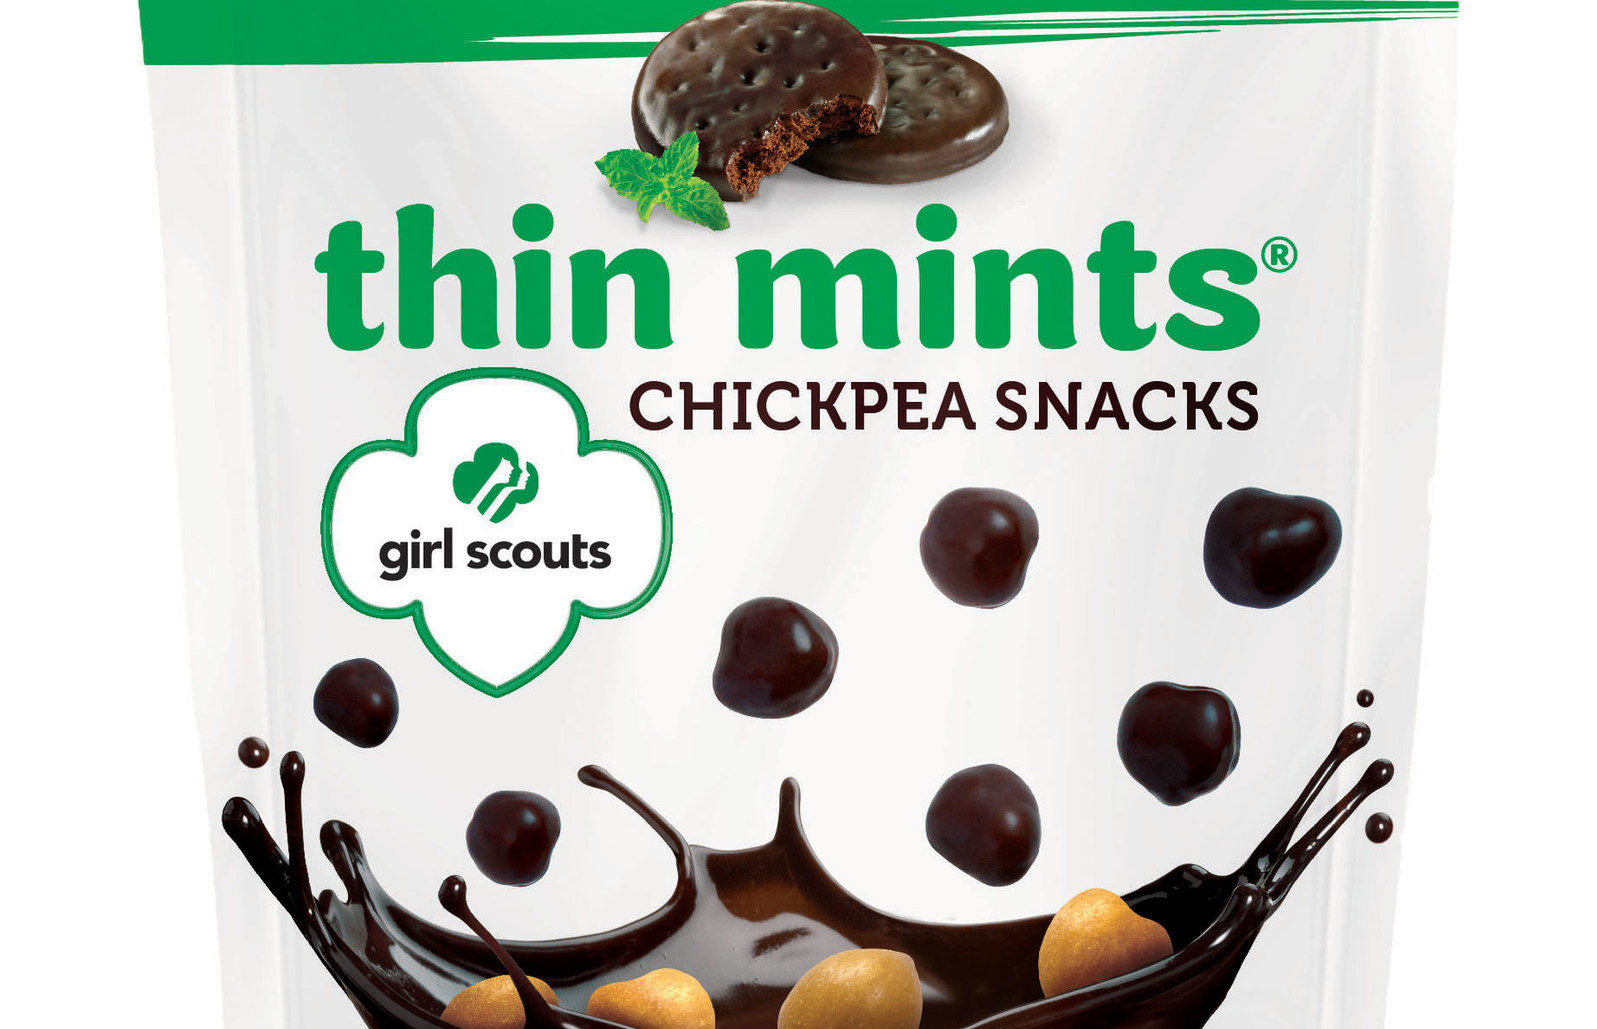 thin mint chickpeas